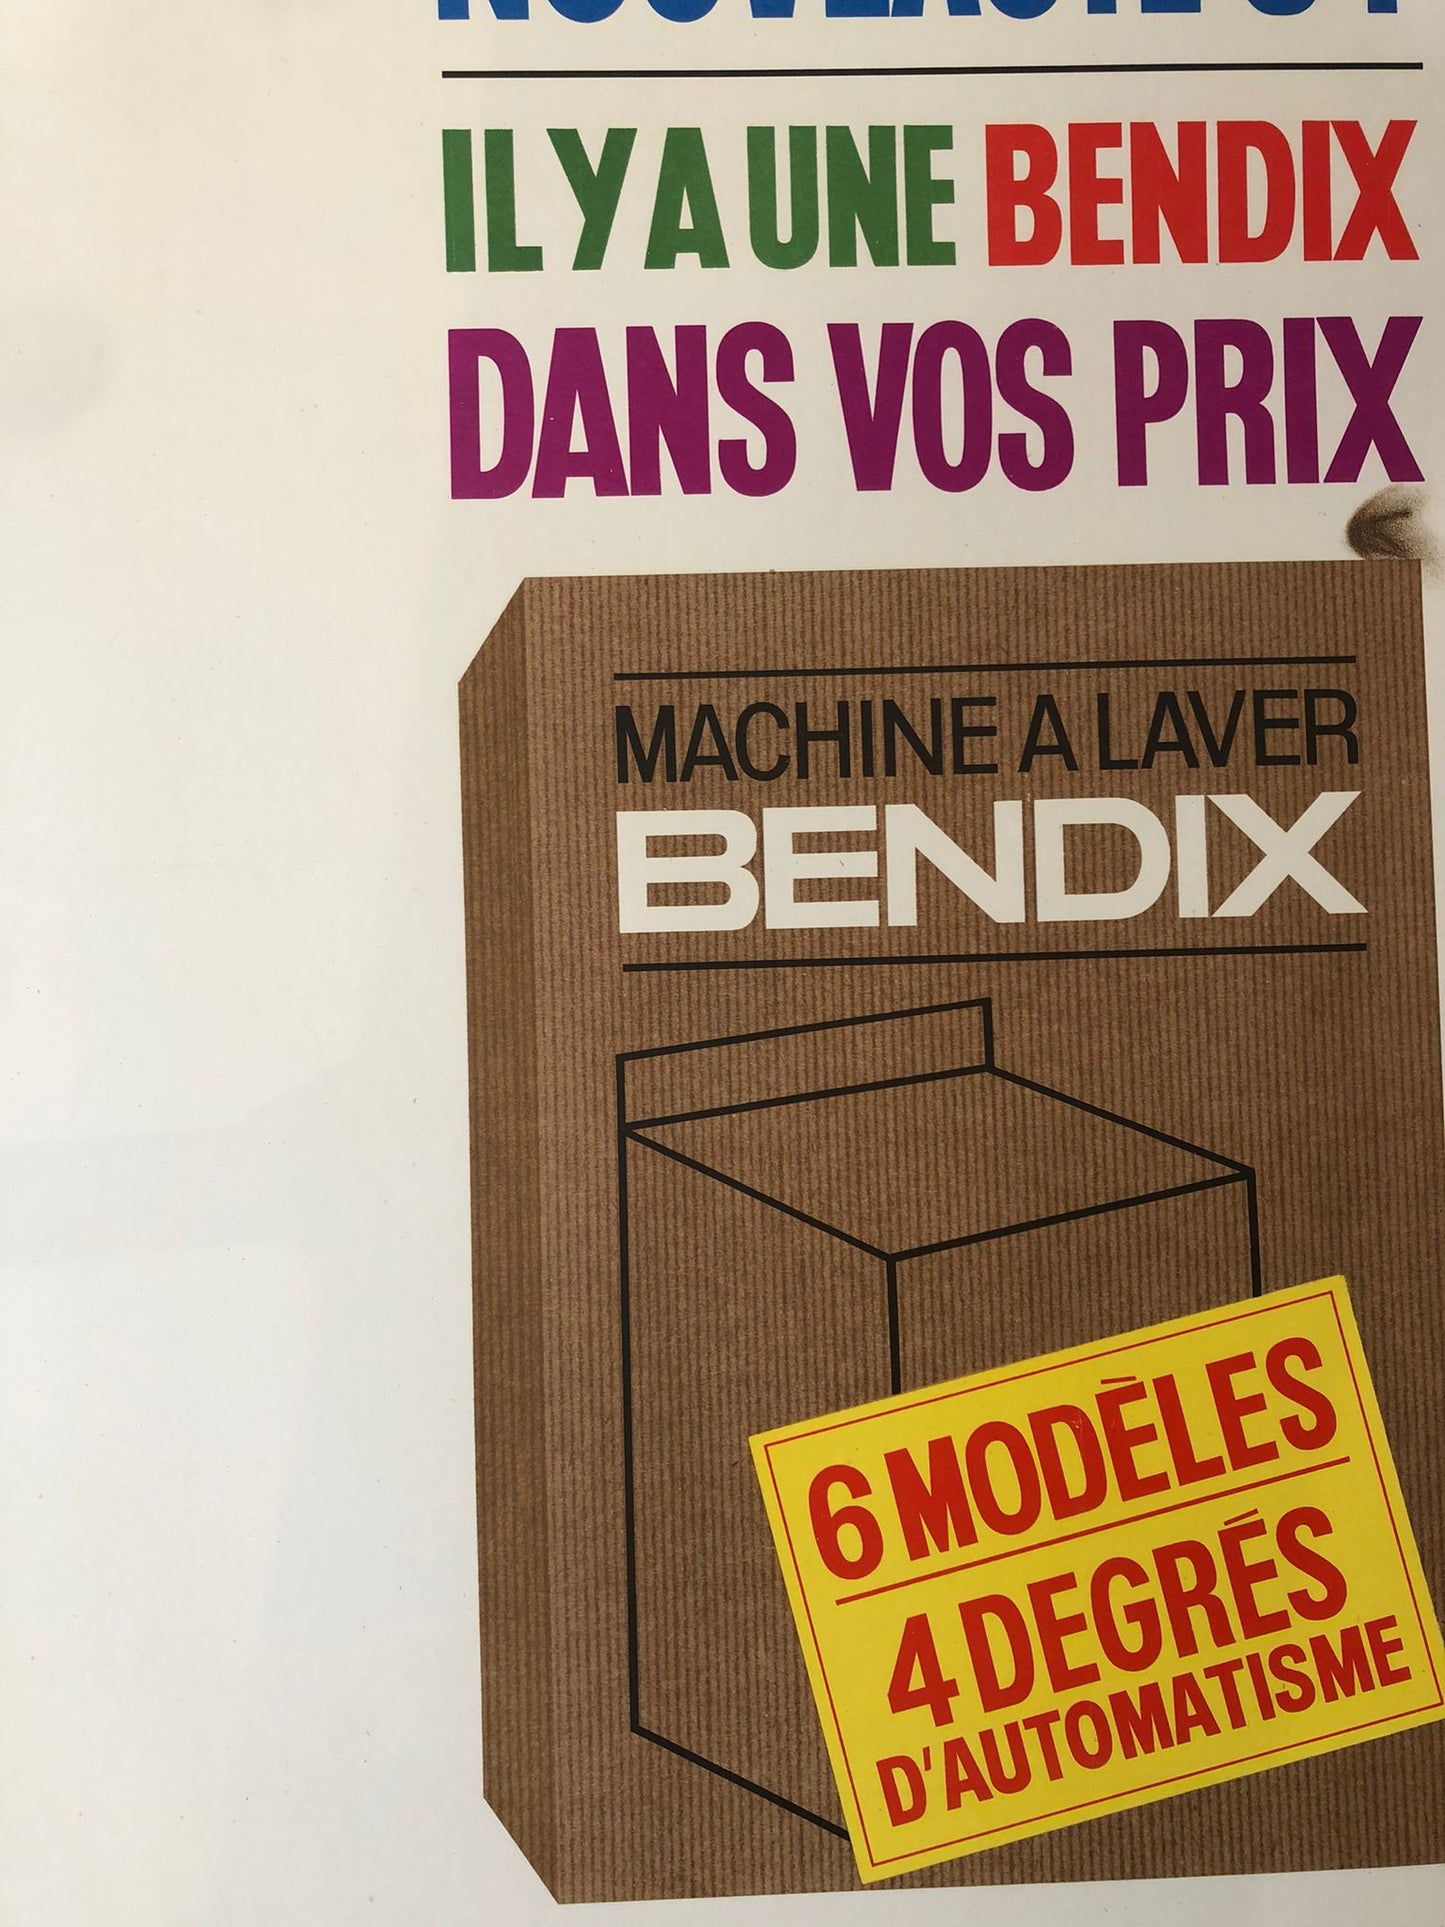 Bendix Washing Powder Advertisement